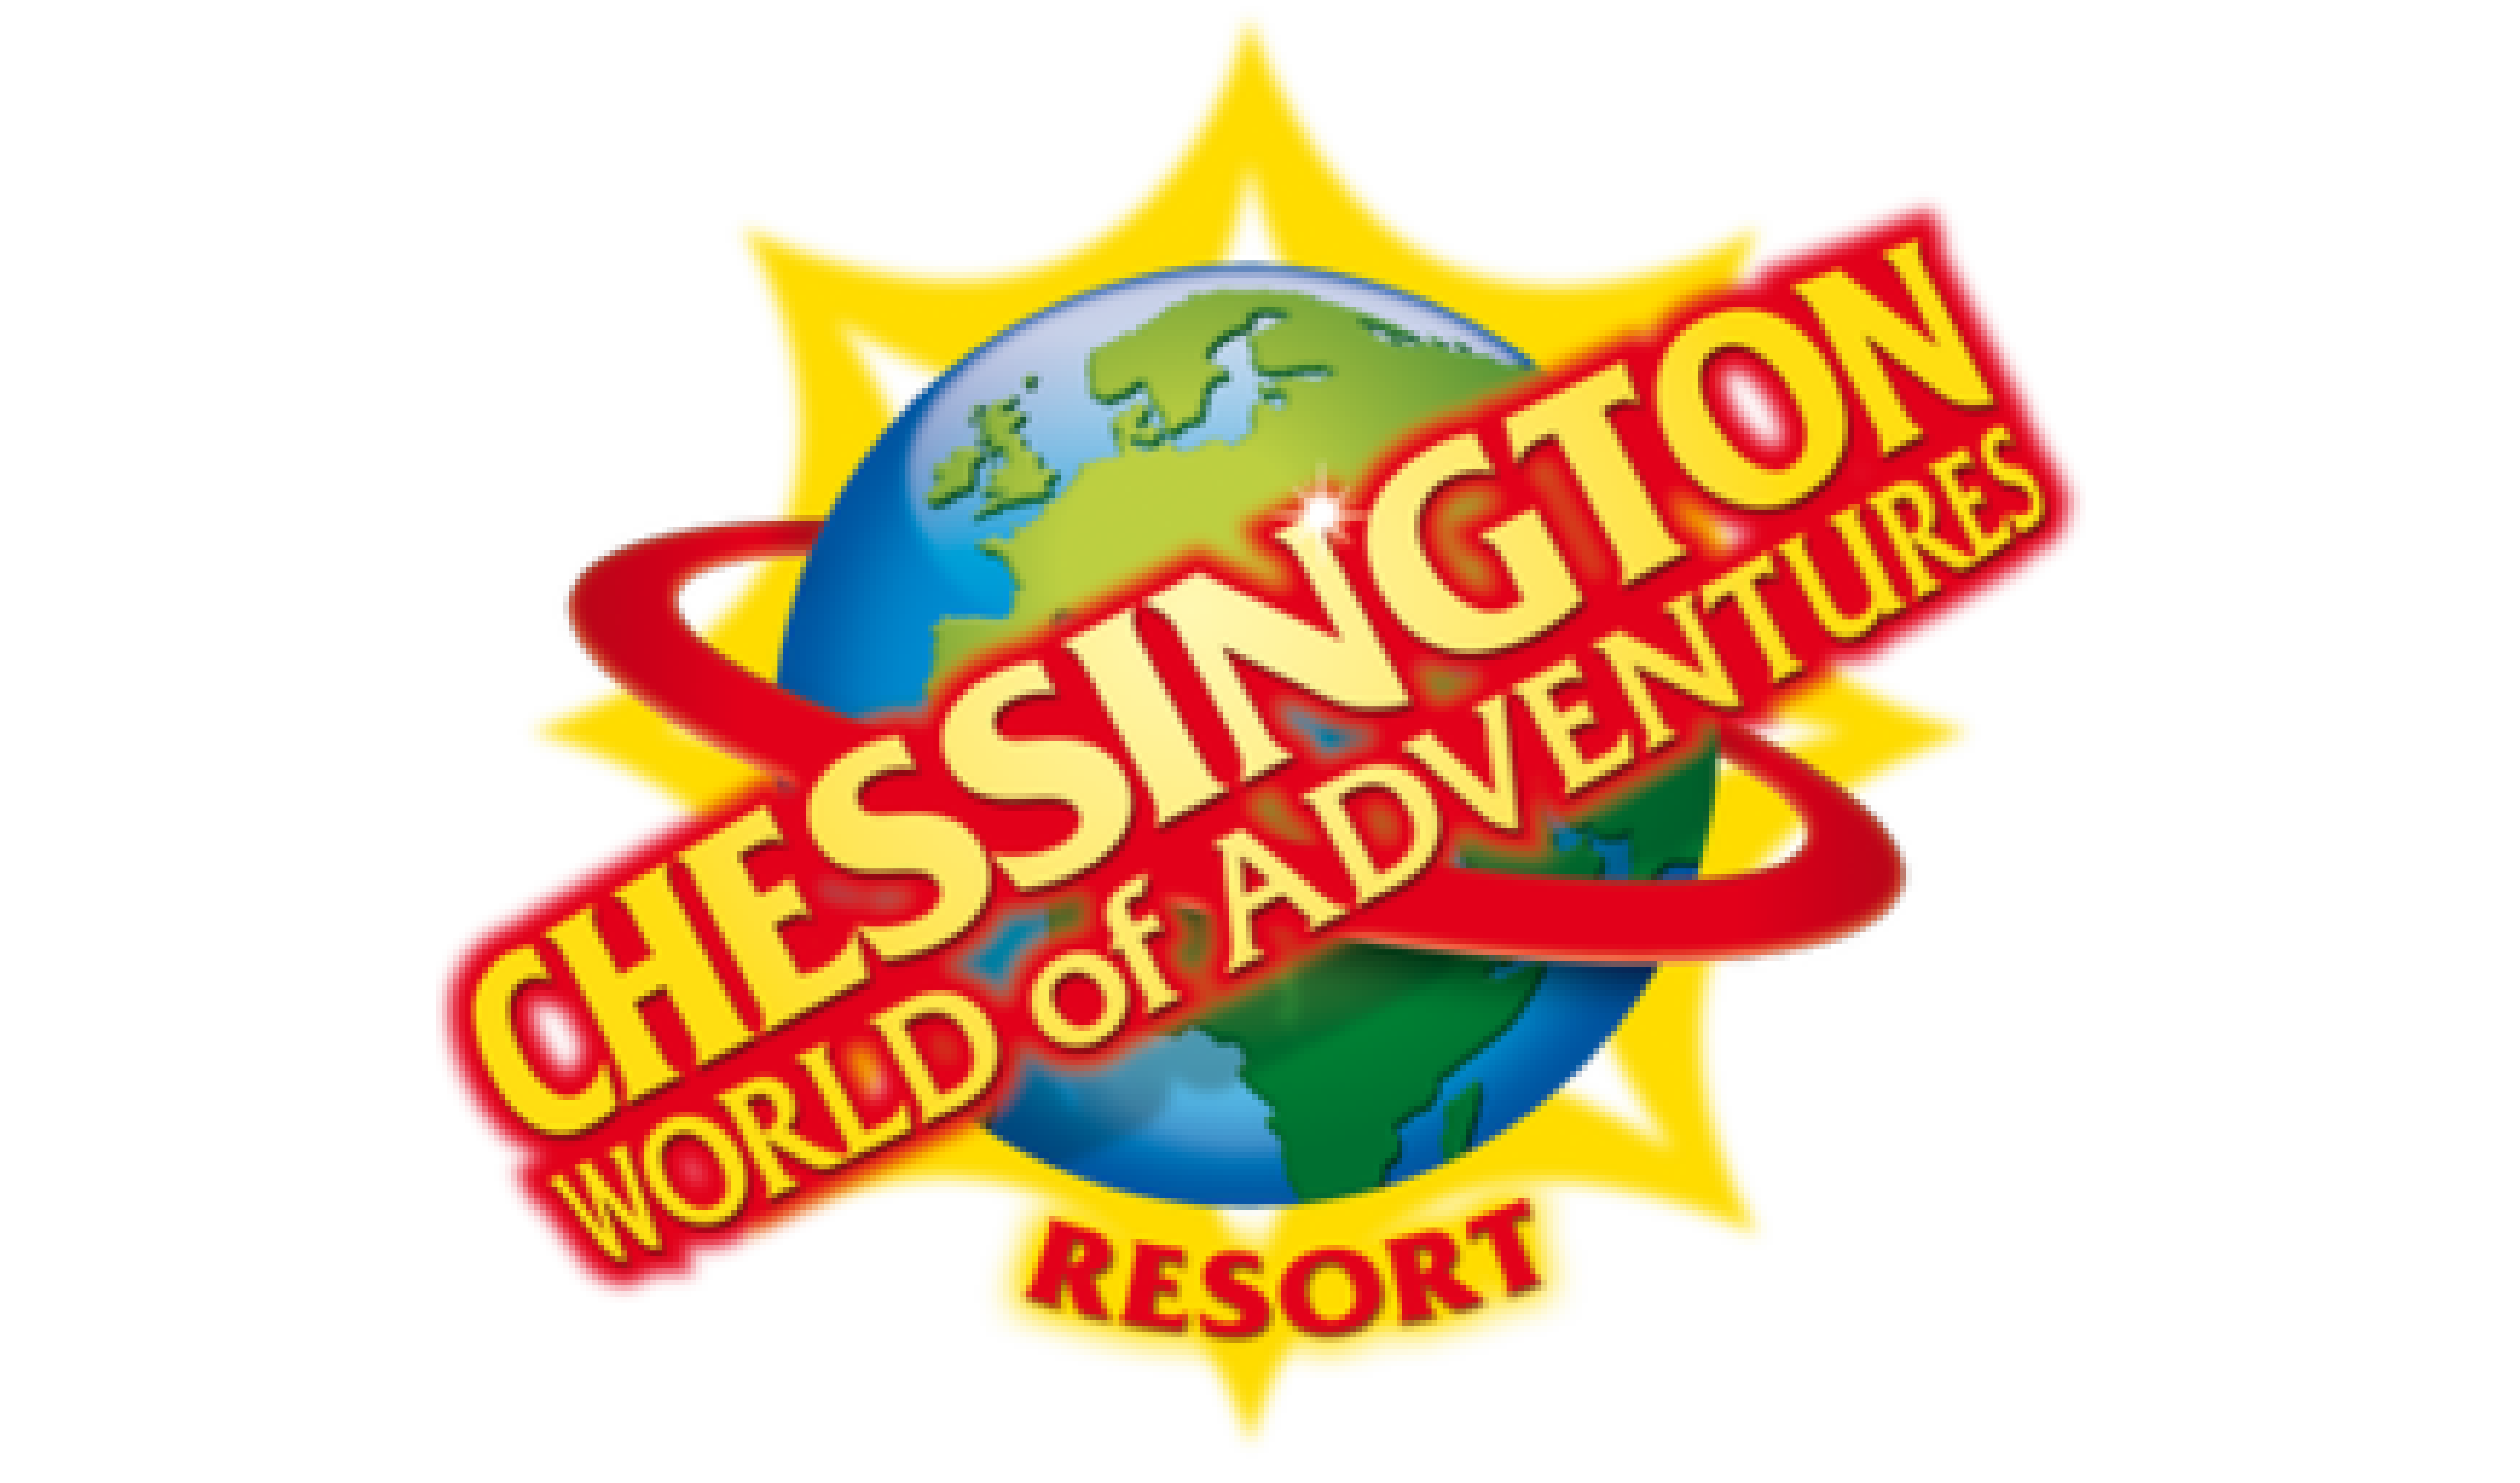 The Chessington World of adventures logo